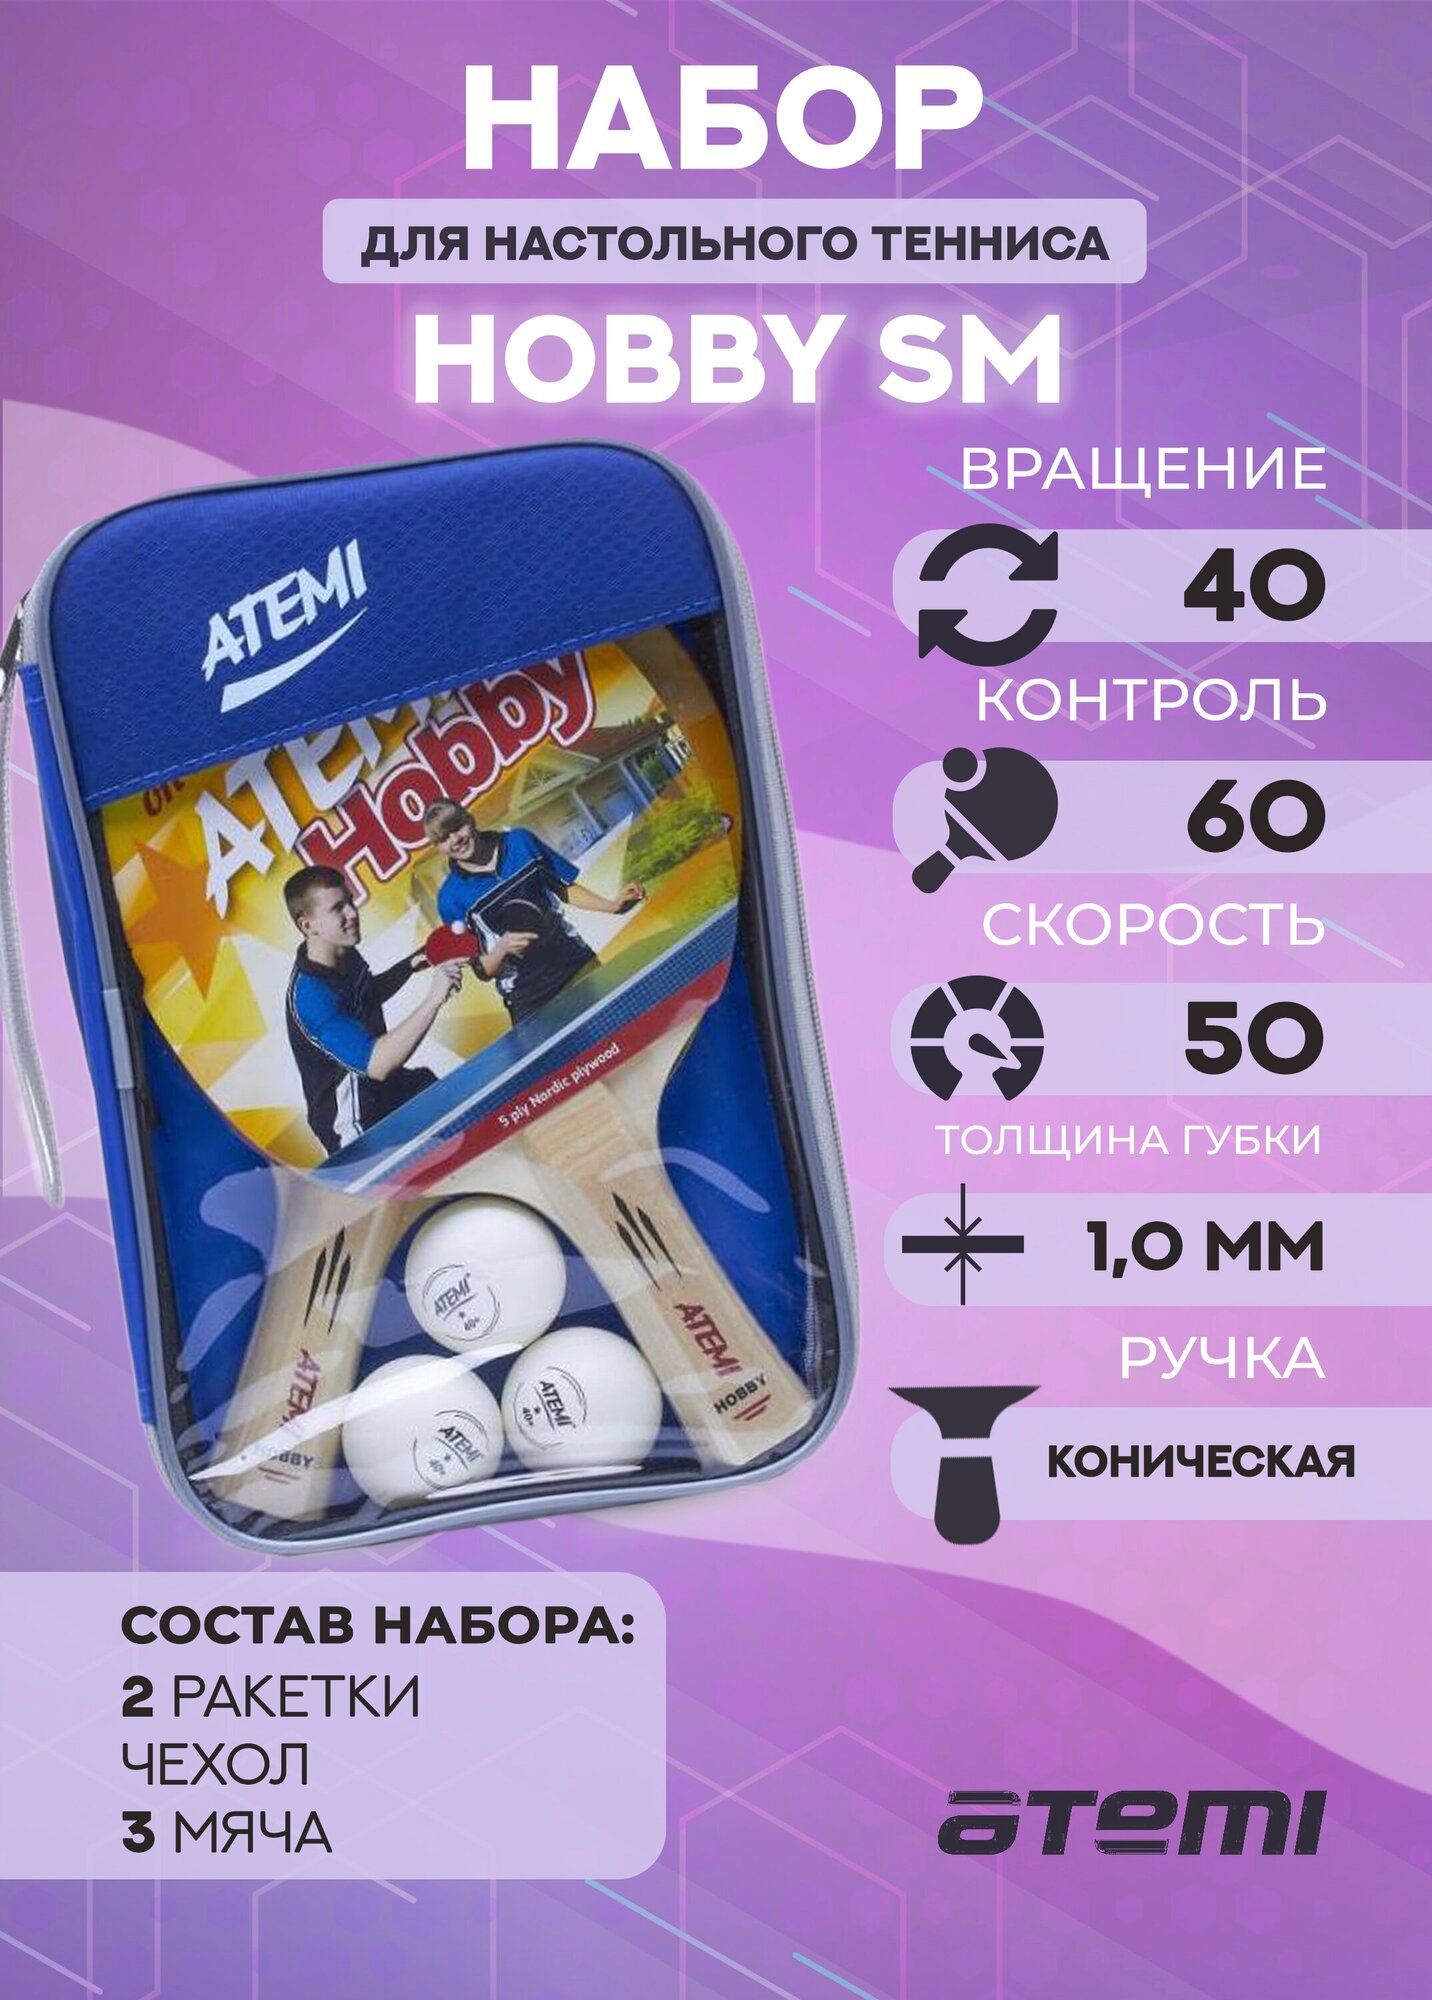 Набор для настольного тенниса Atemi Hobby SM (2ракетки+3мяча*+чехол)